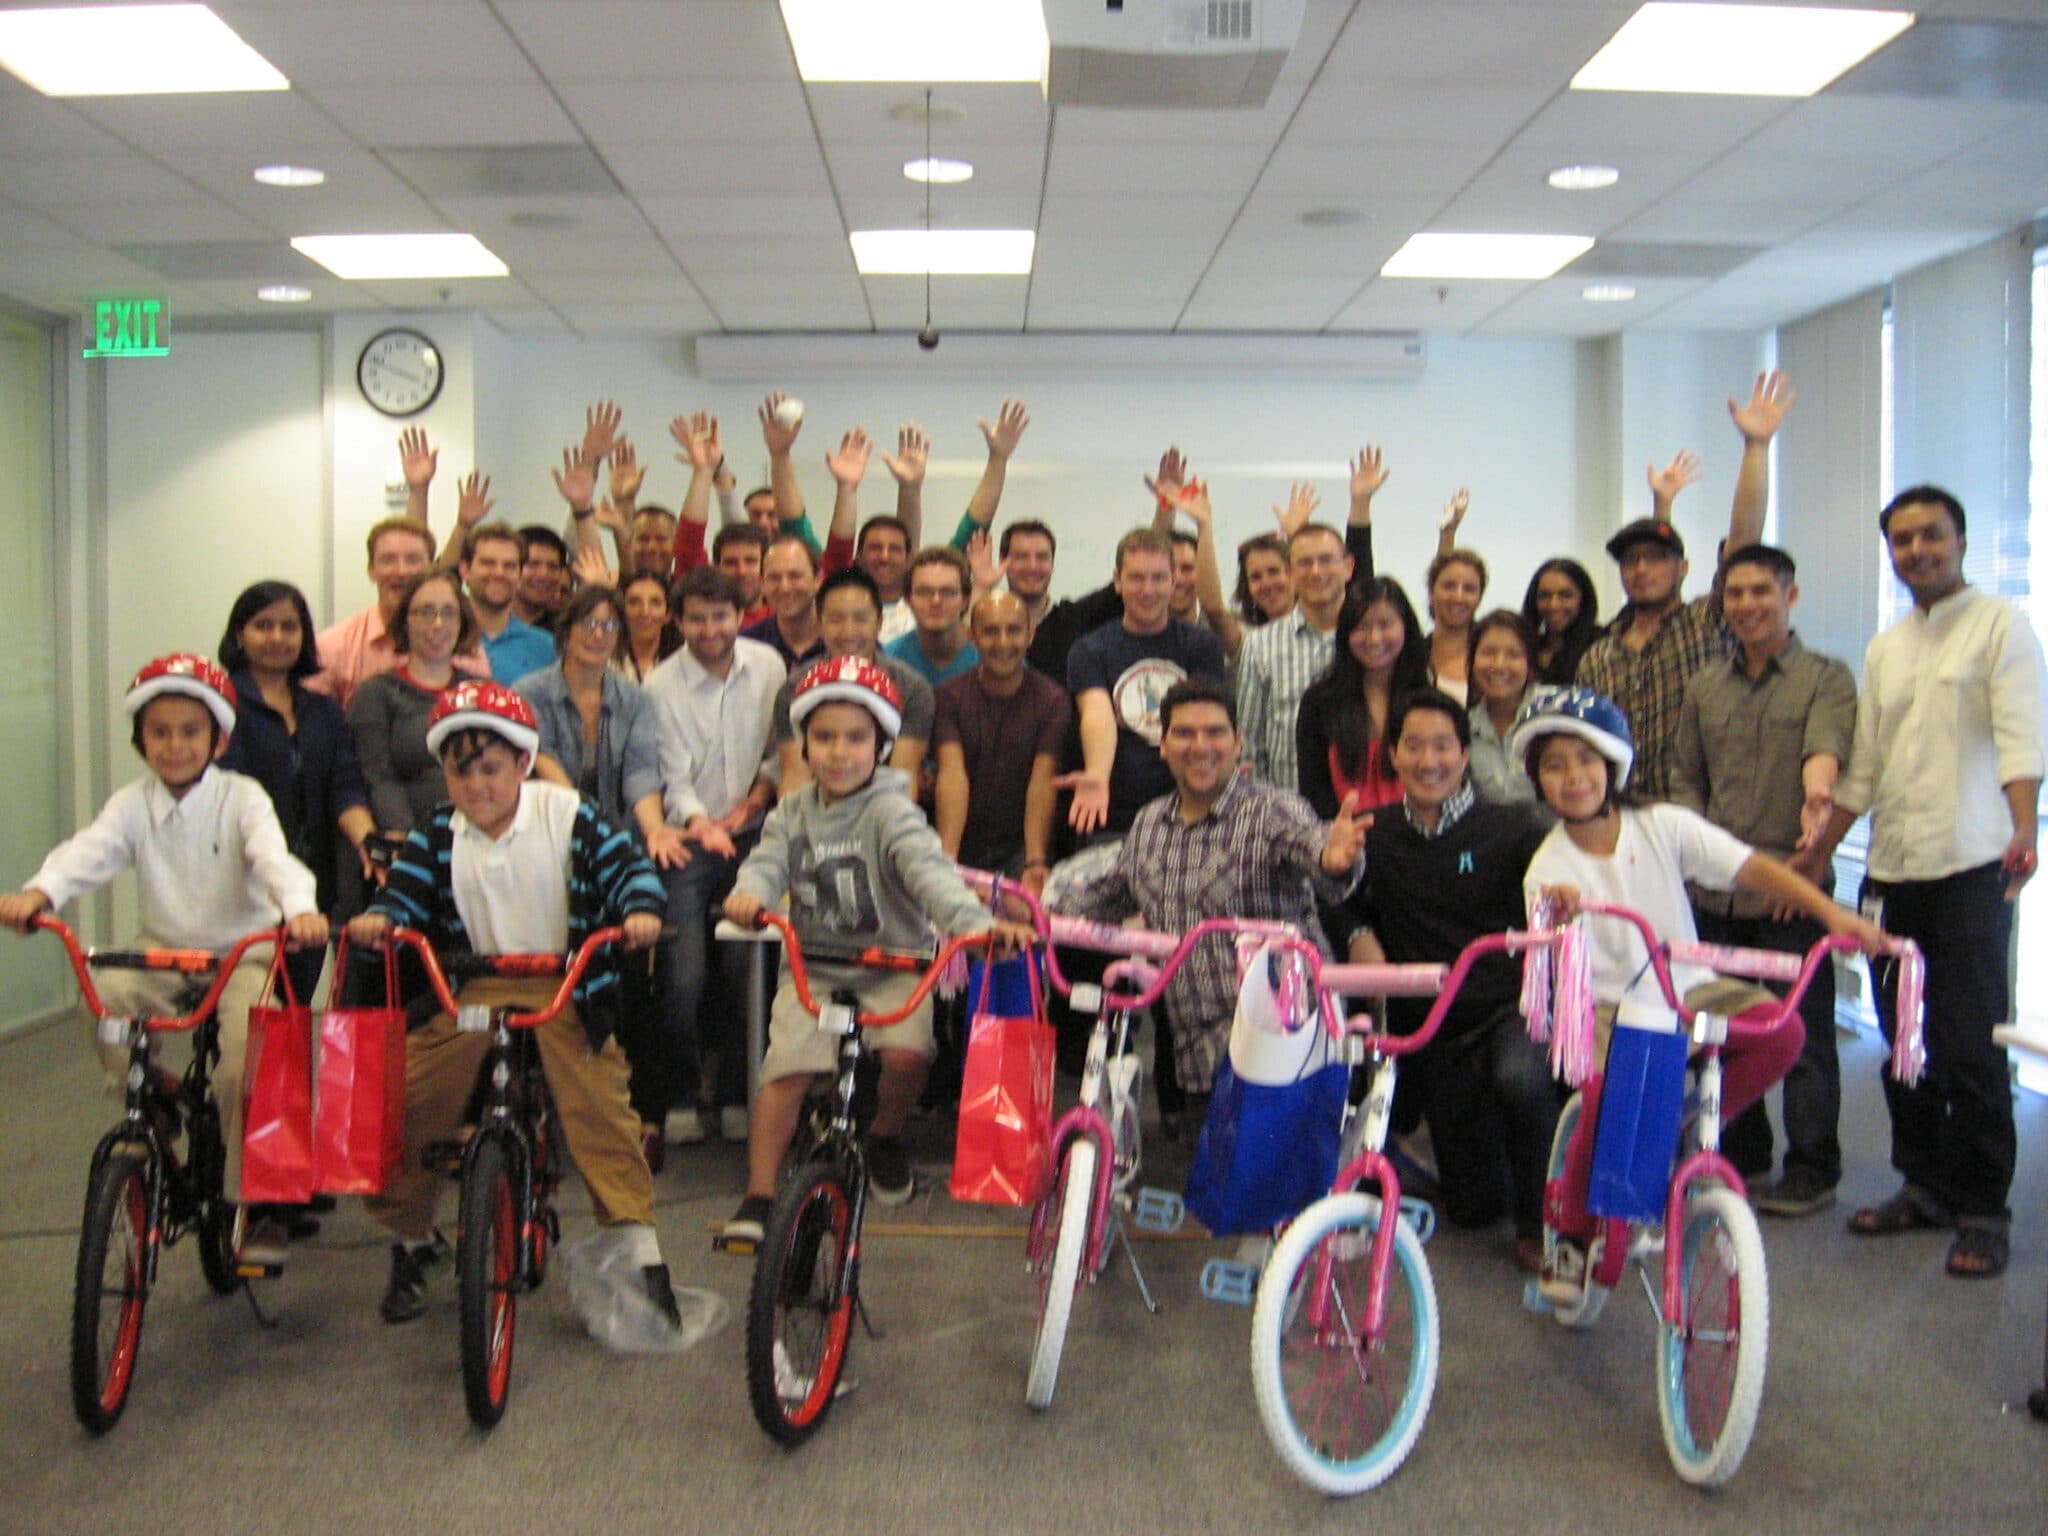 StubHub Brings Build-A-Bike Event to San Francisco